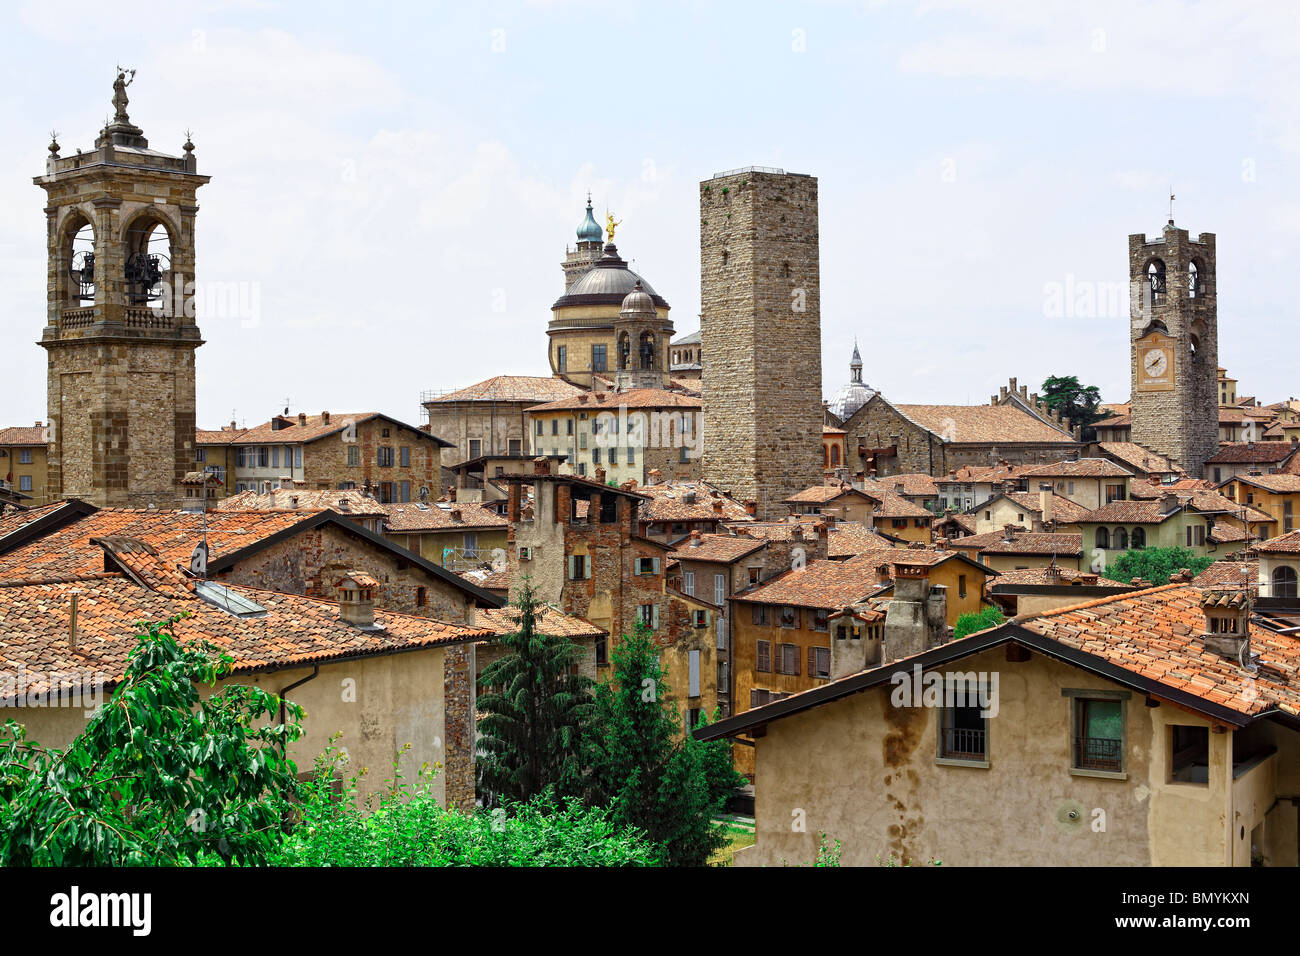 Vista de la ciudad italiana de Bergamo alta Foto de stock